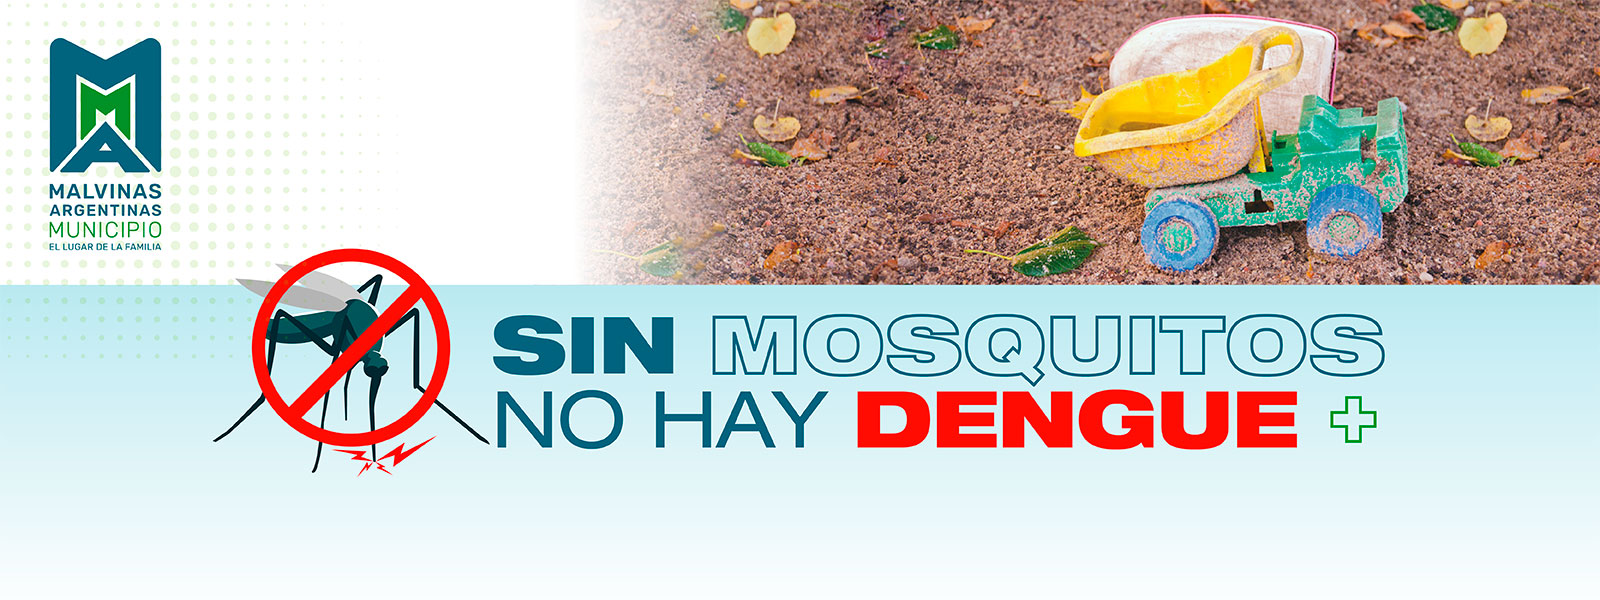 banner dengue